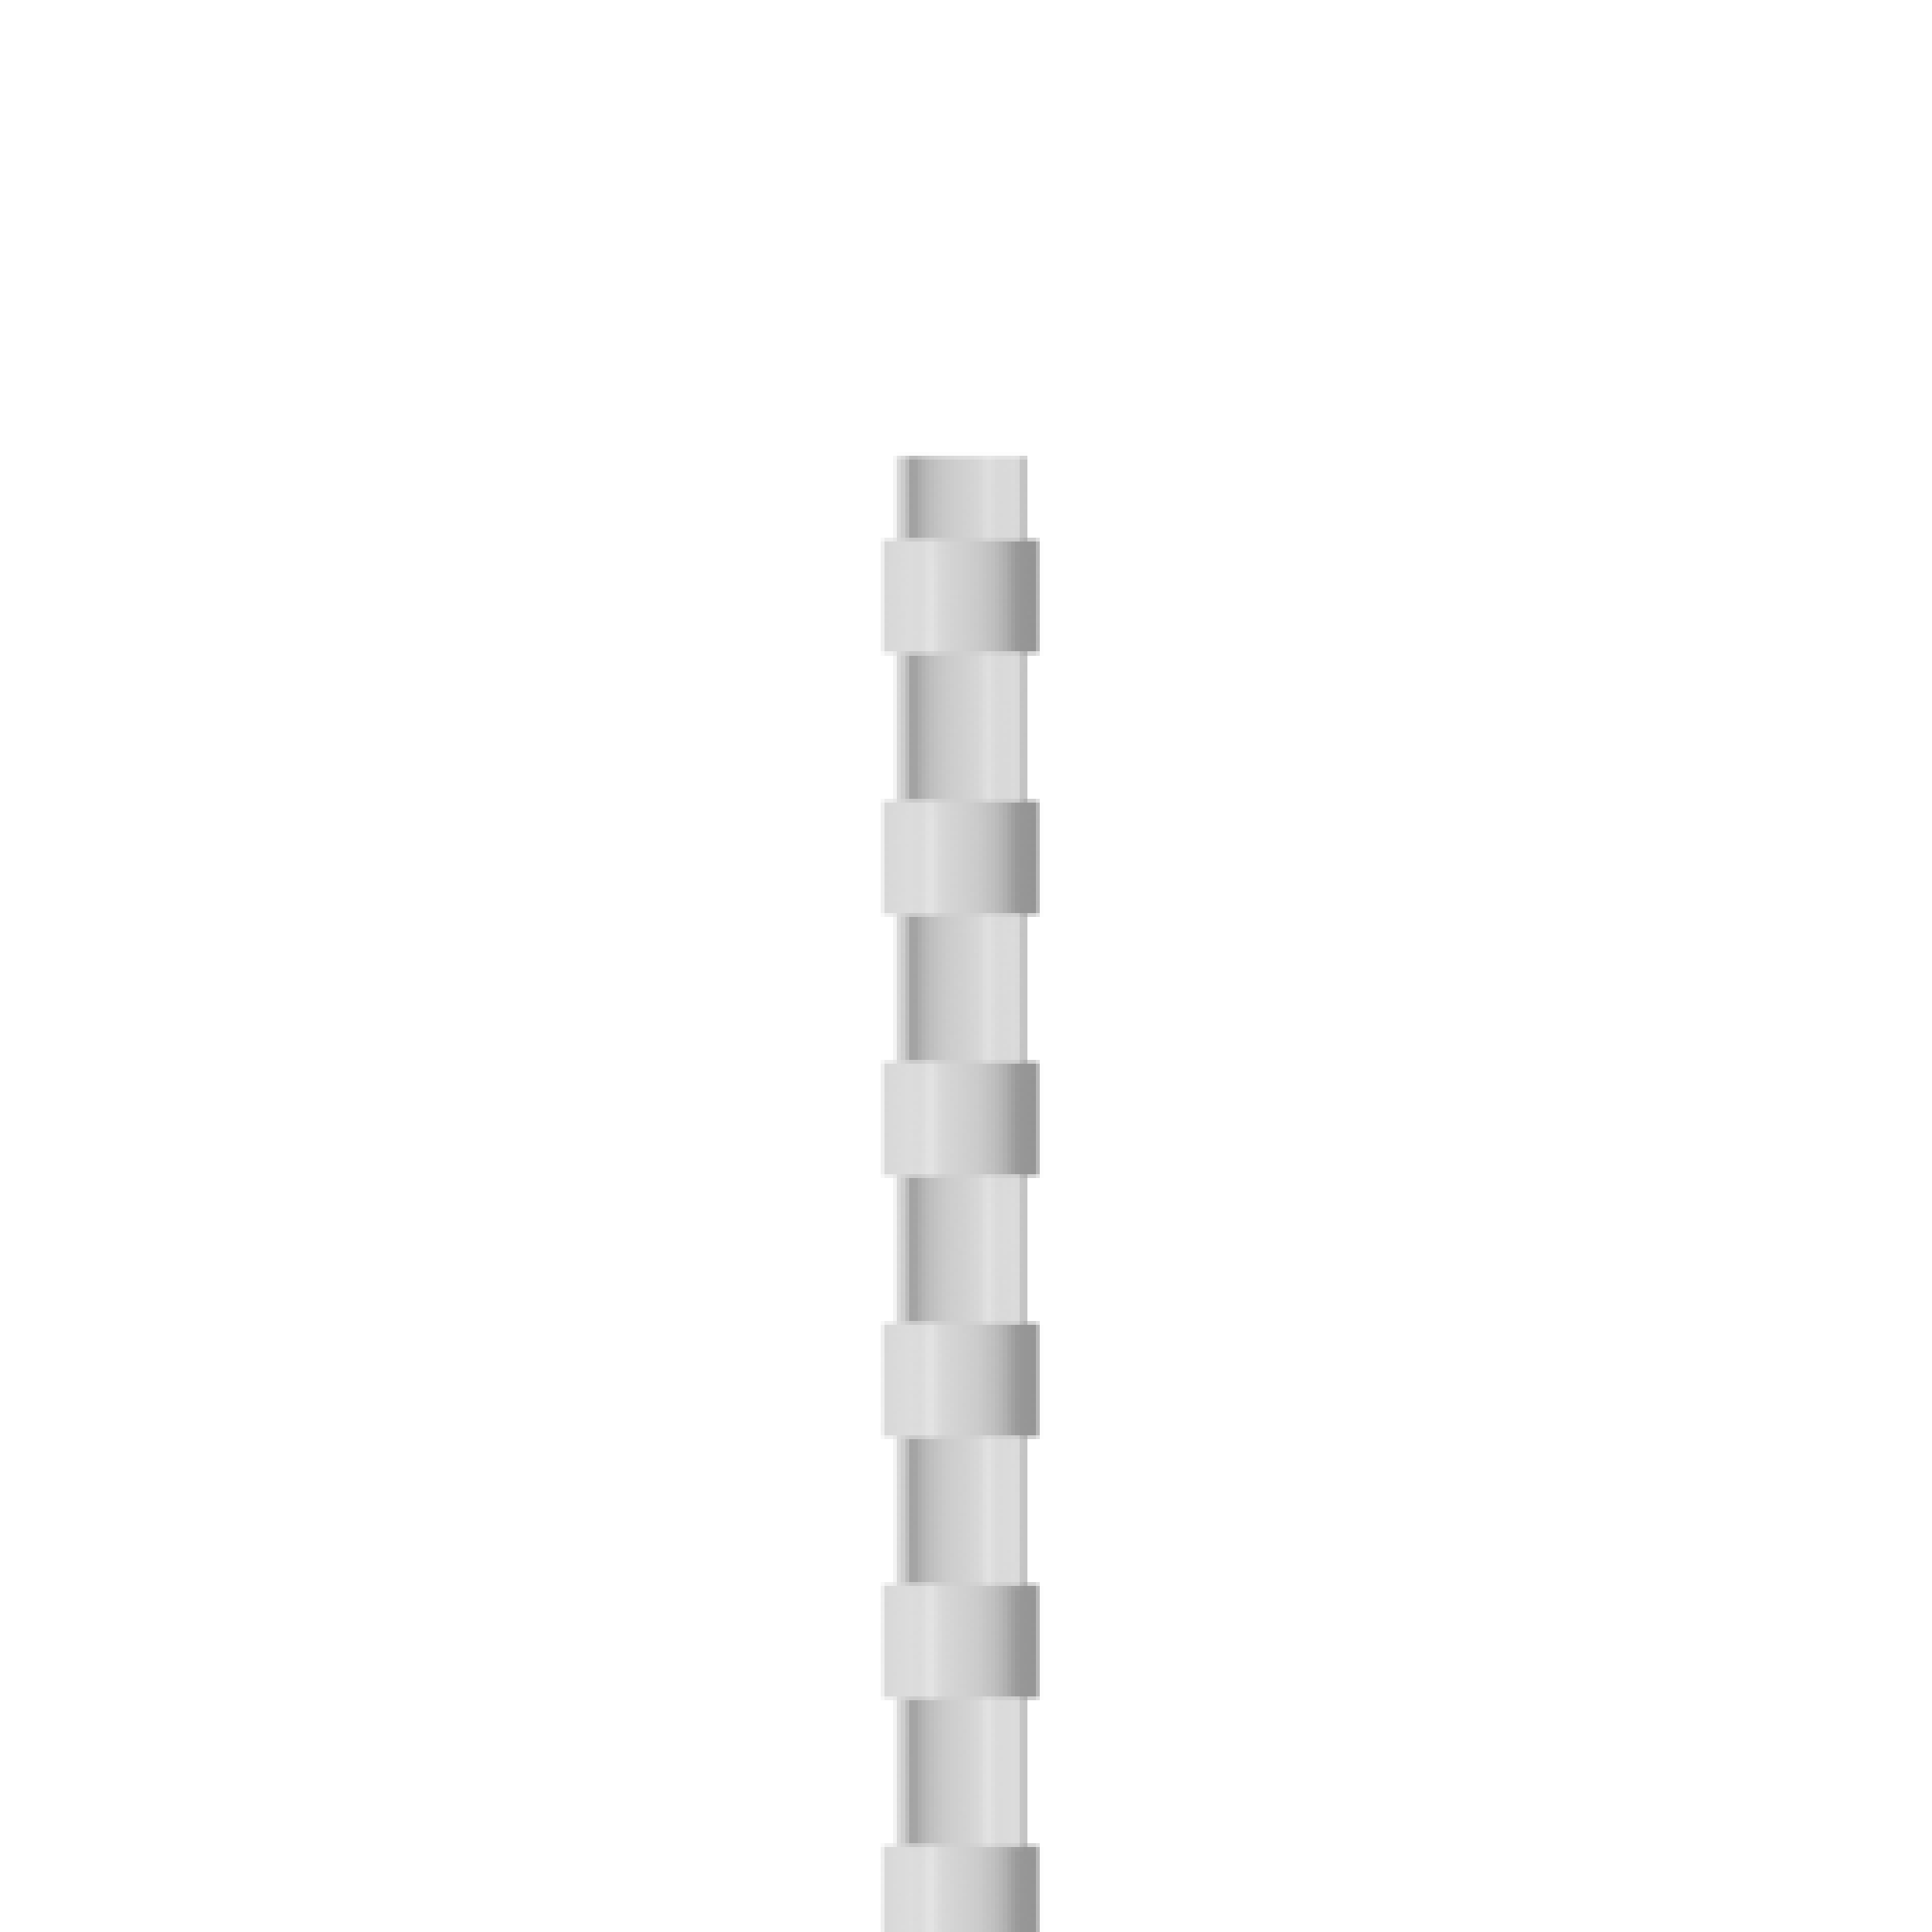 RAADO 8mm Plastic Spiral Binding Comb, White